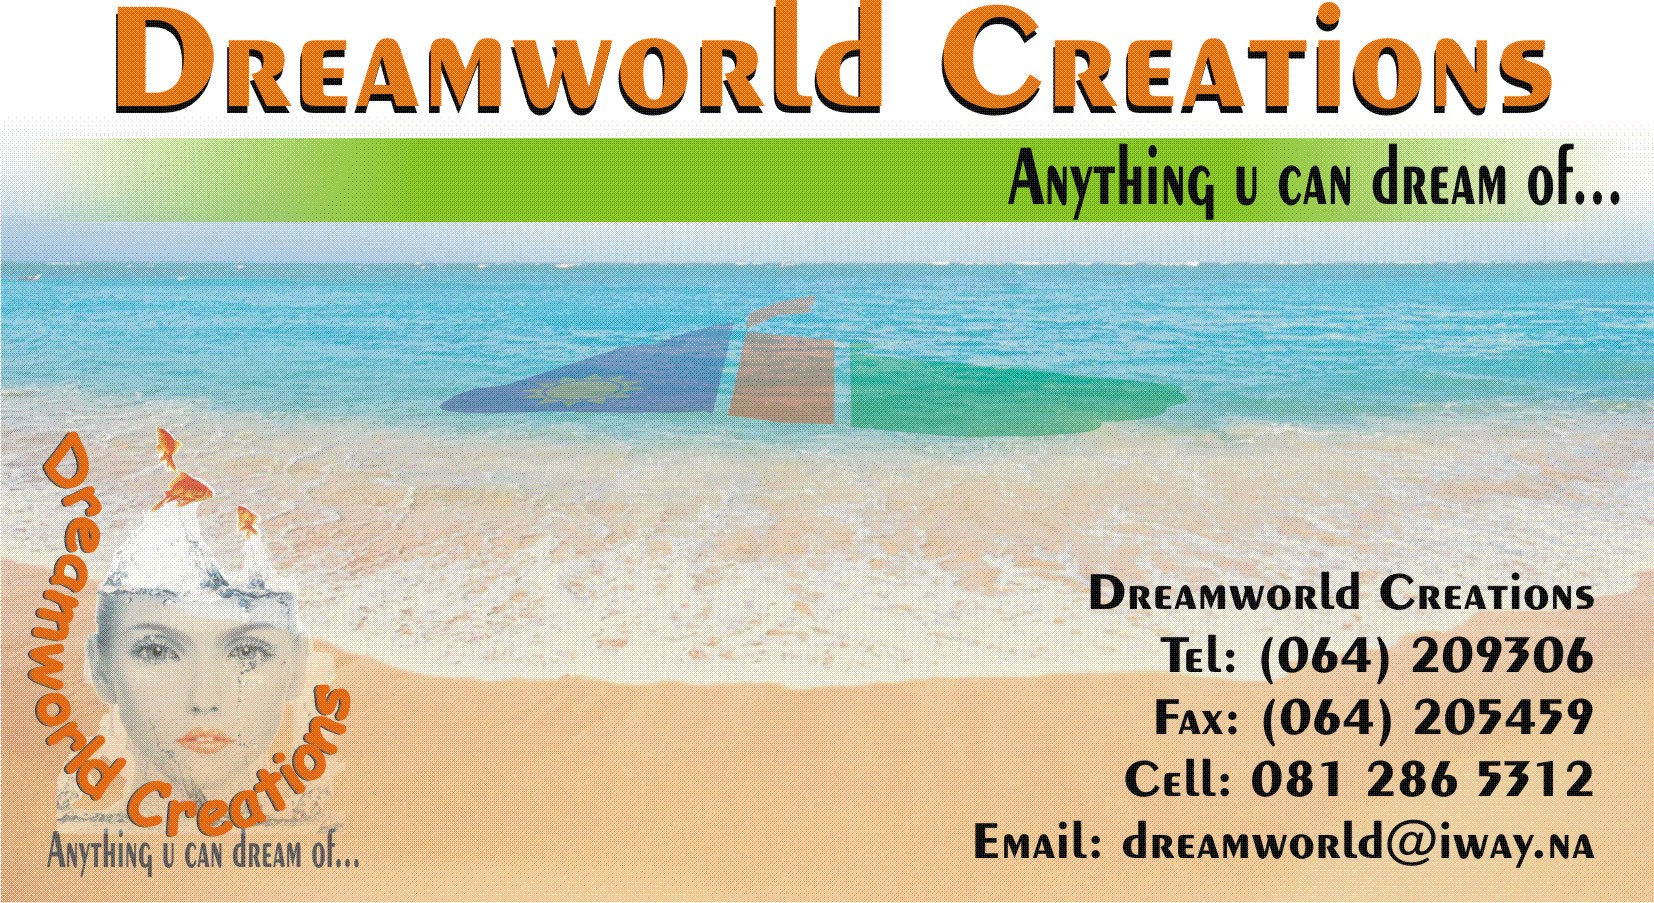 Dreamworld Creations